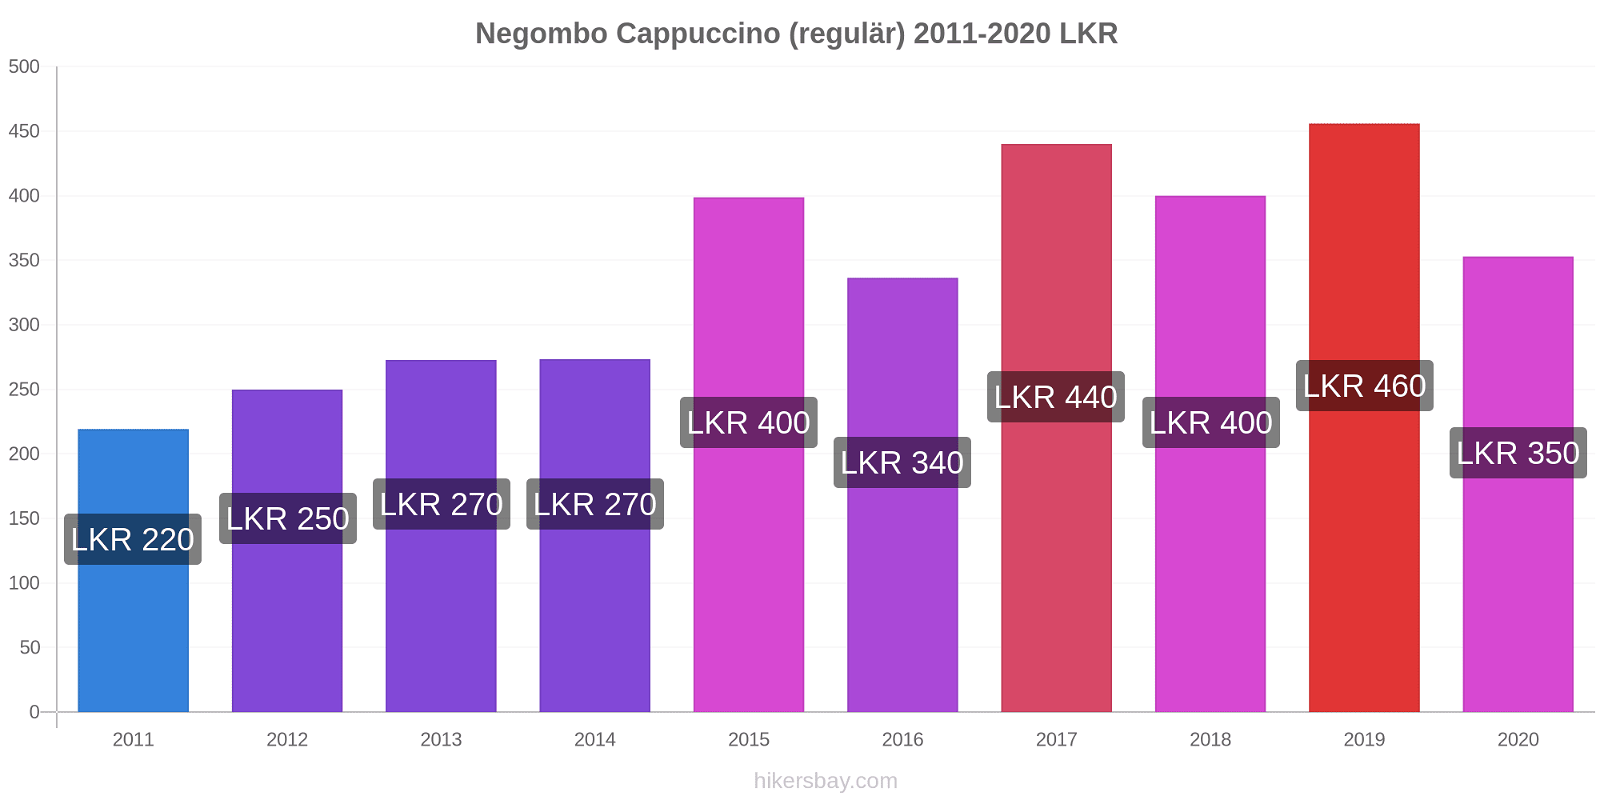 Negombo Preisänderungen Cappuccino (regulär) hikersbay.com